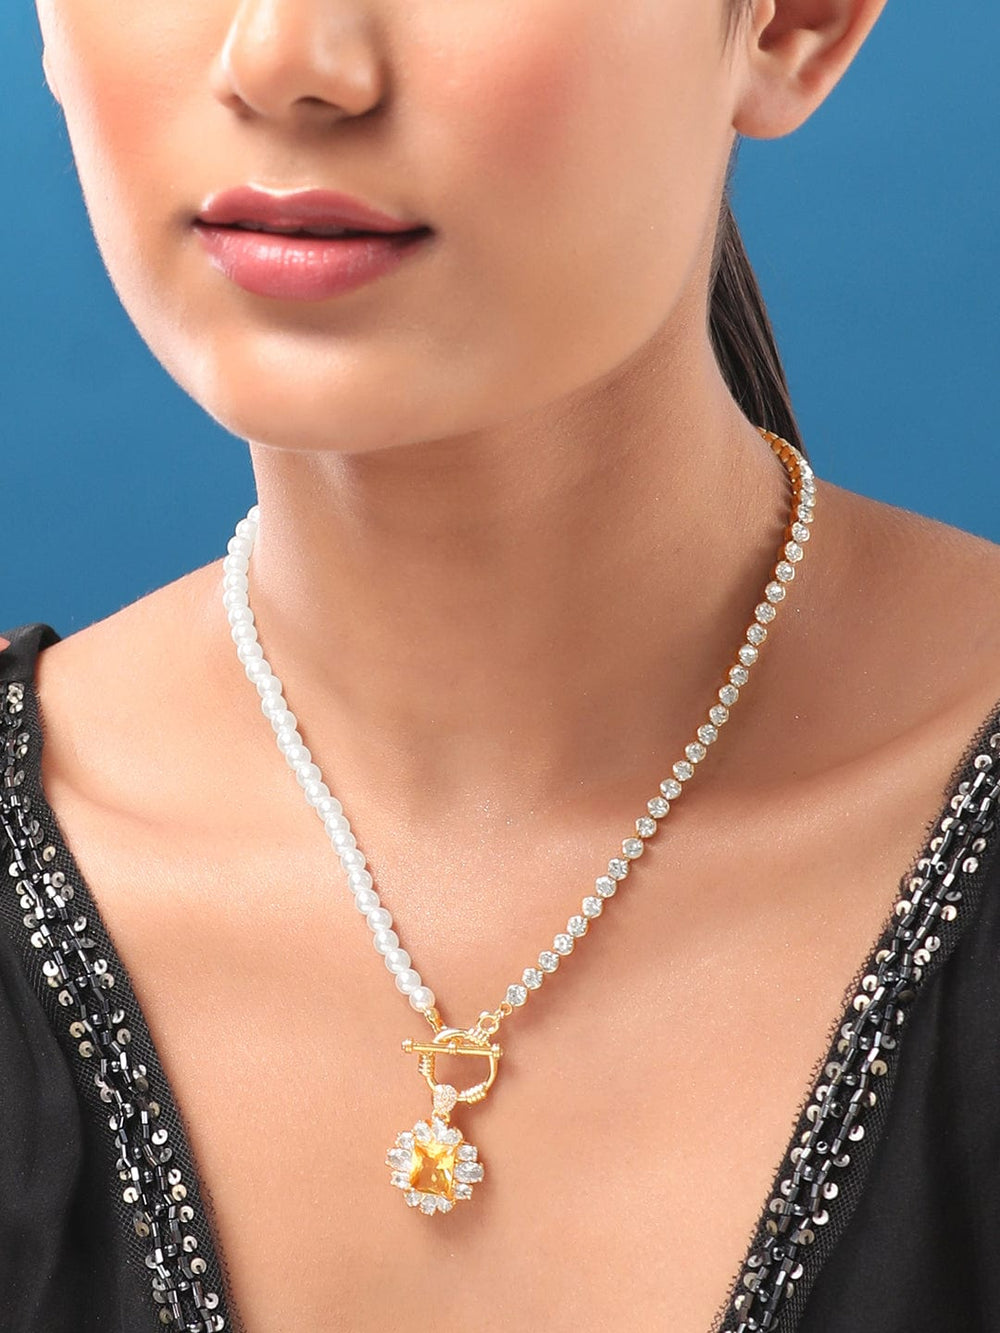 Rubans Voguish Chain & Pearl Multi Textured Pendant Necklace Necklaces, Necklace Sets, Chains & Mangalsutra